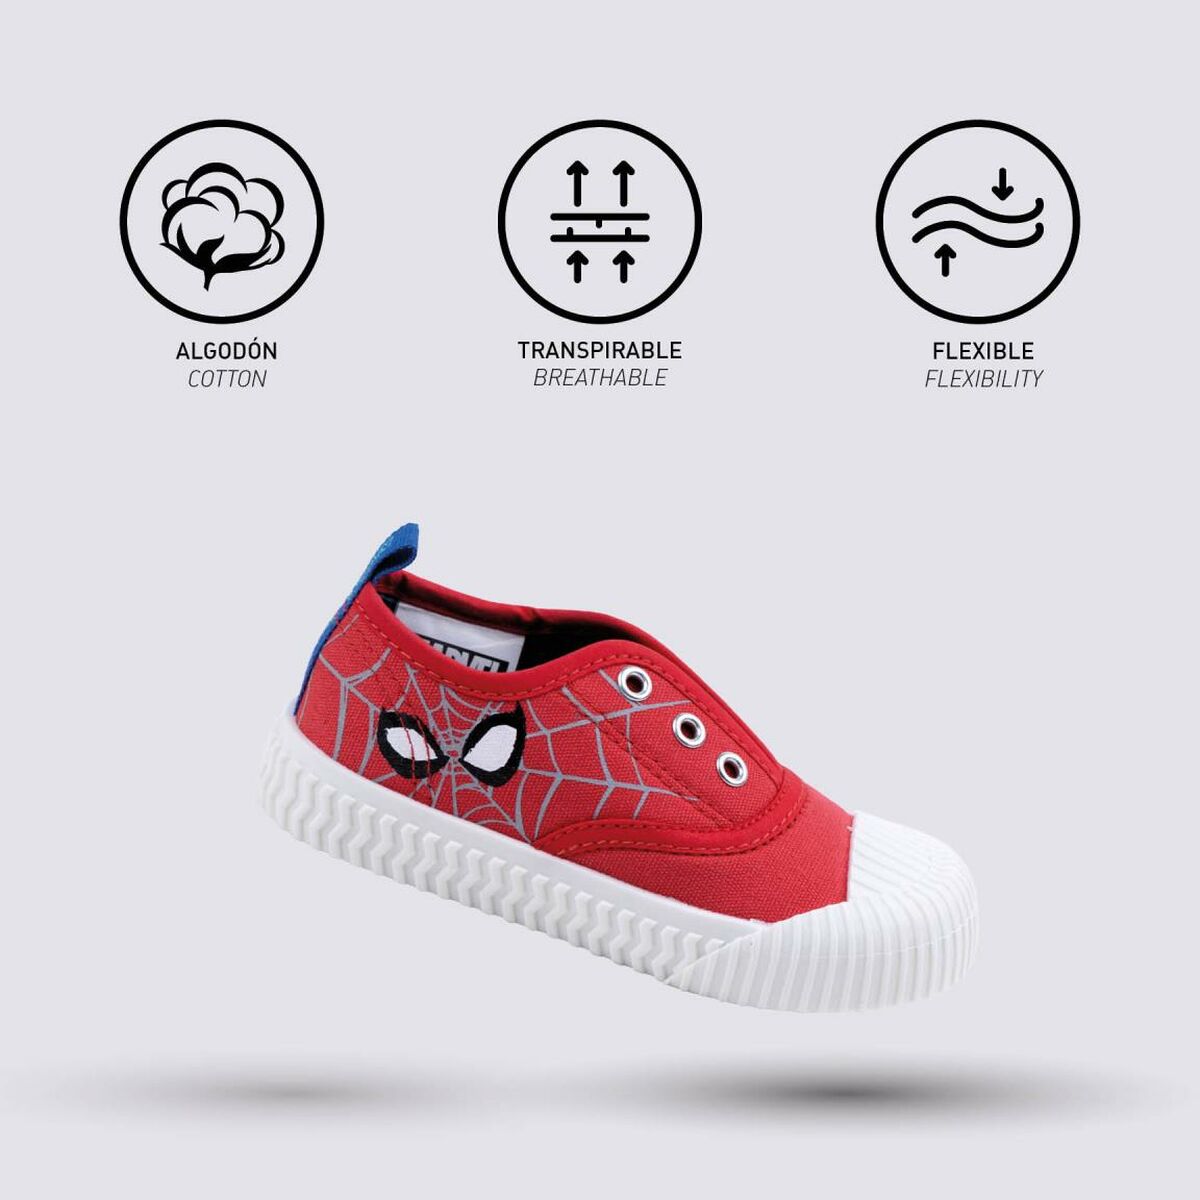 Adidași Casual Copii Spiderman Roșu - Mărime la picior 22